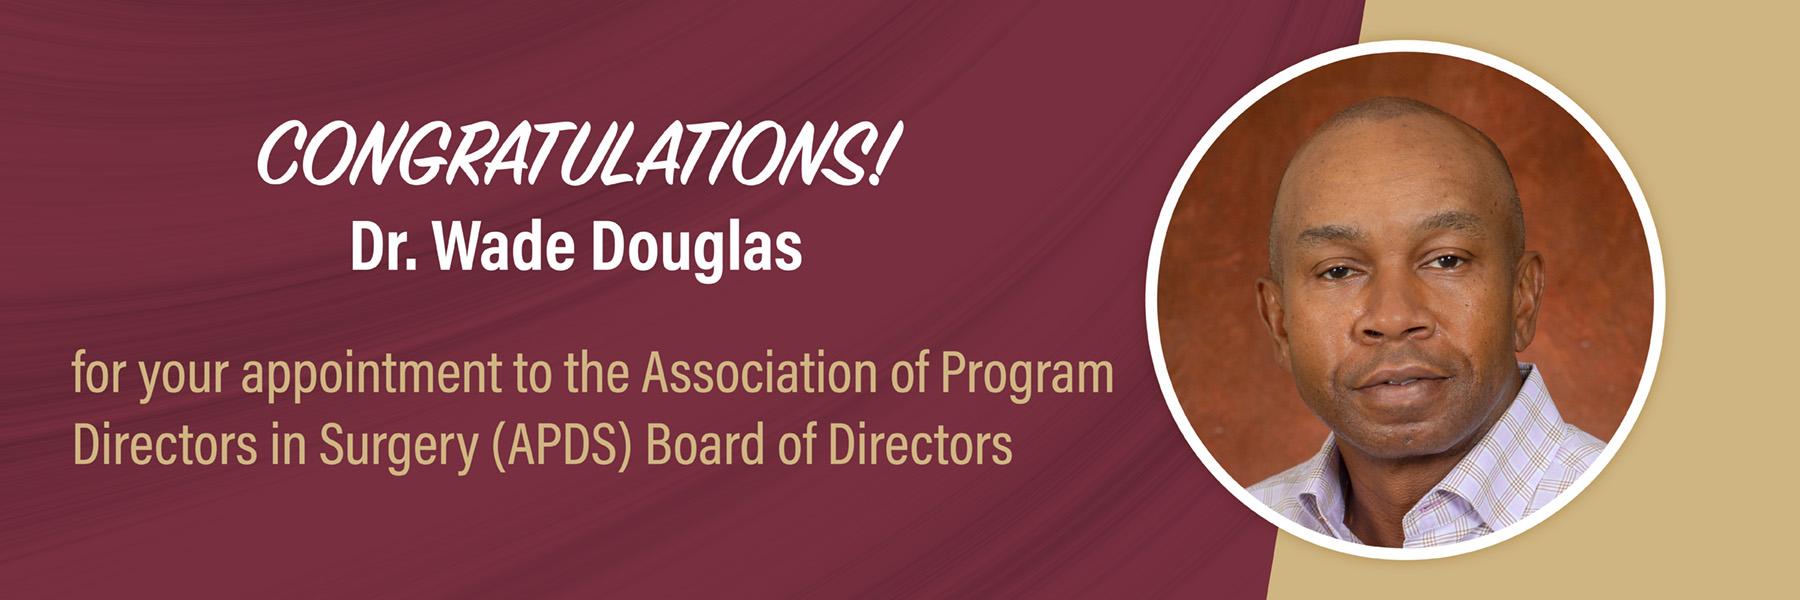 Congratulations Dr Douglas